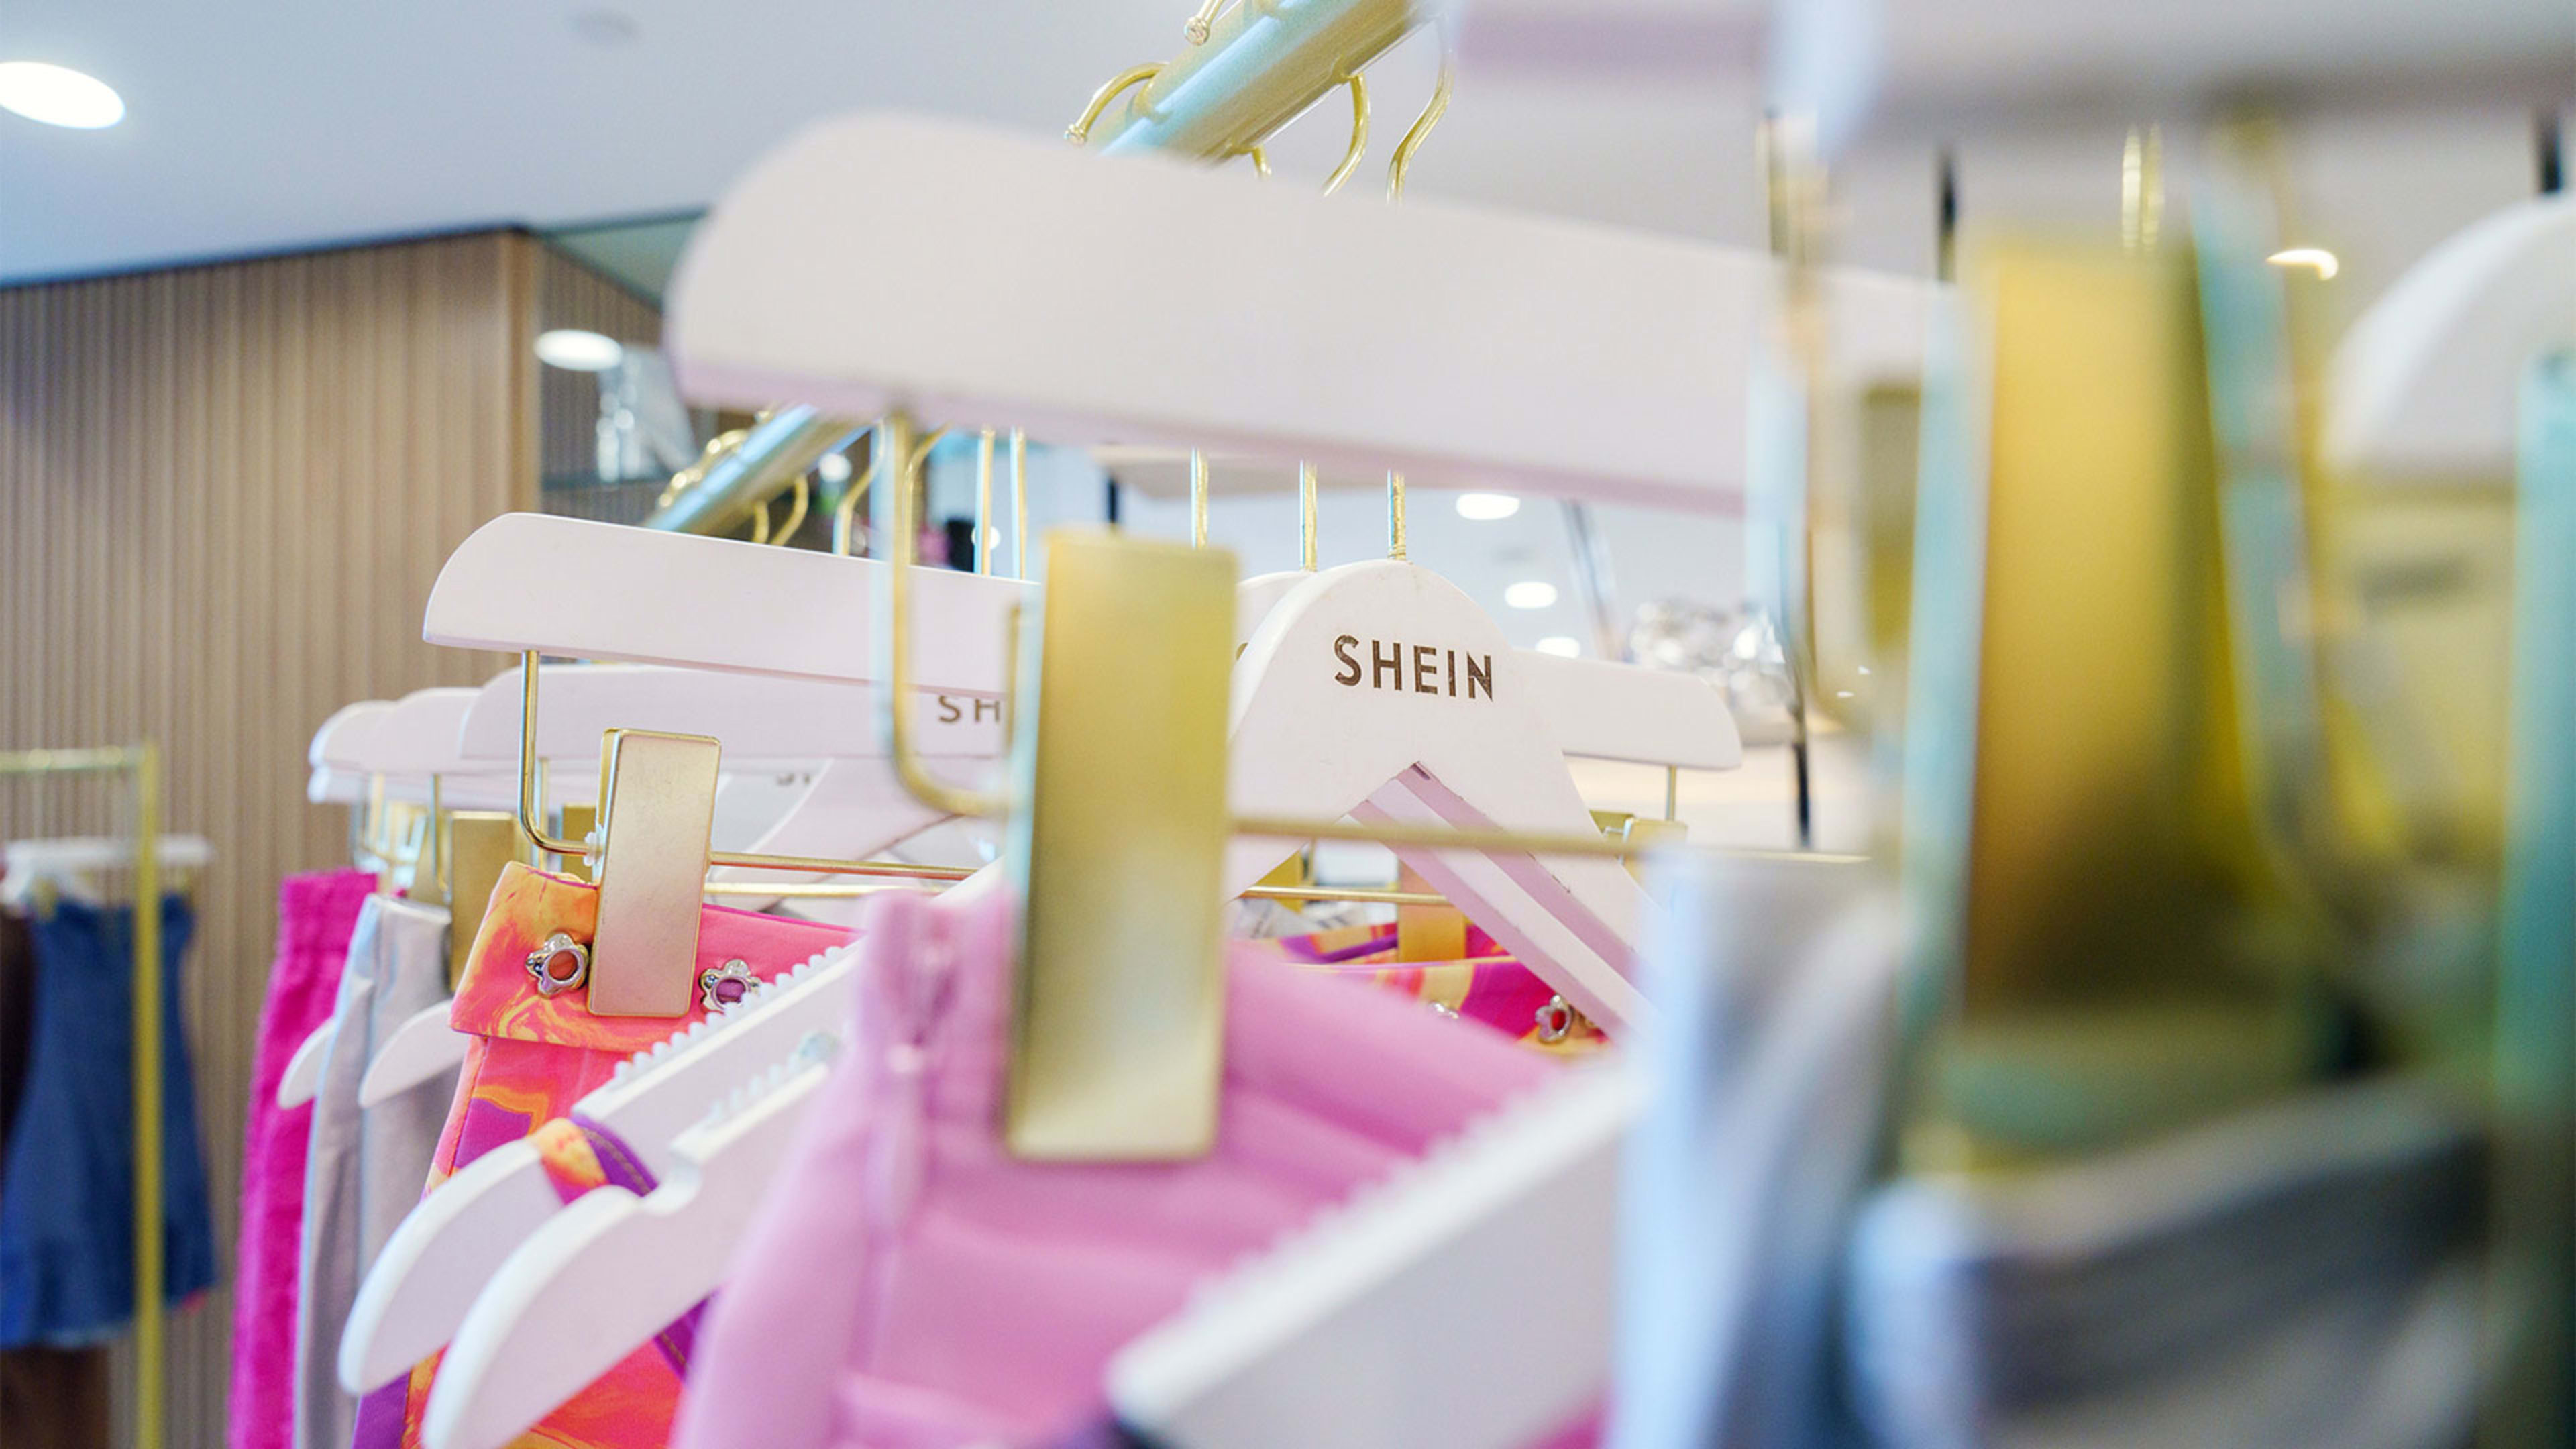 Shein IPO: Gen Z favorite fast-fashion brand files to go public in the U.S.